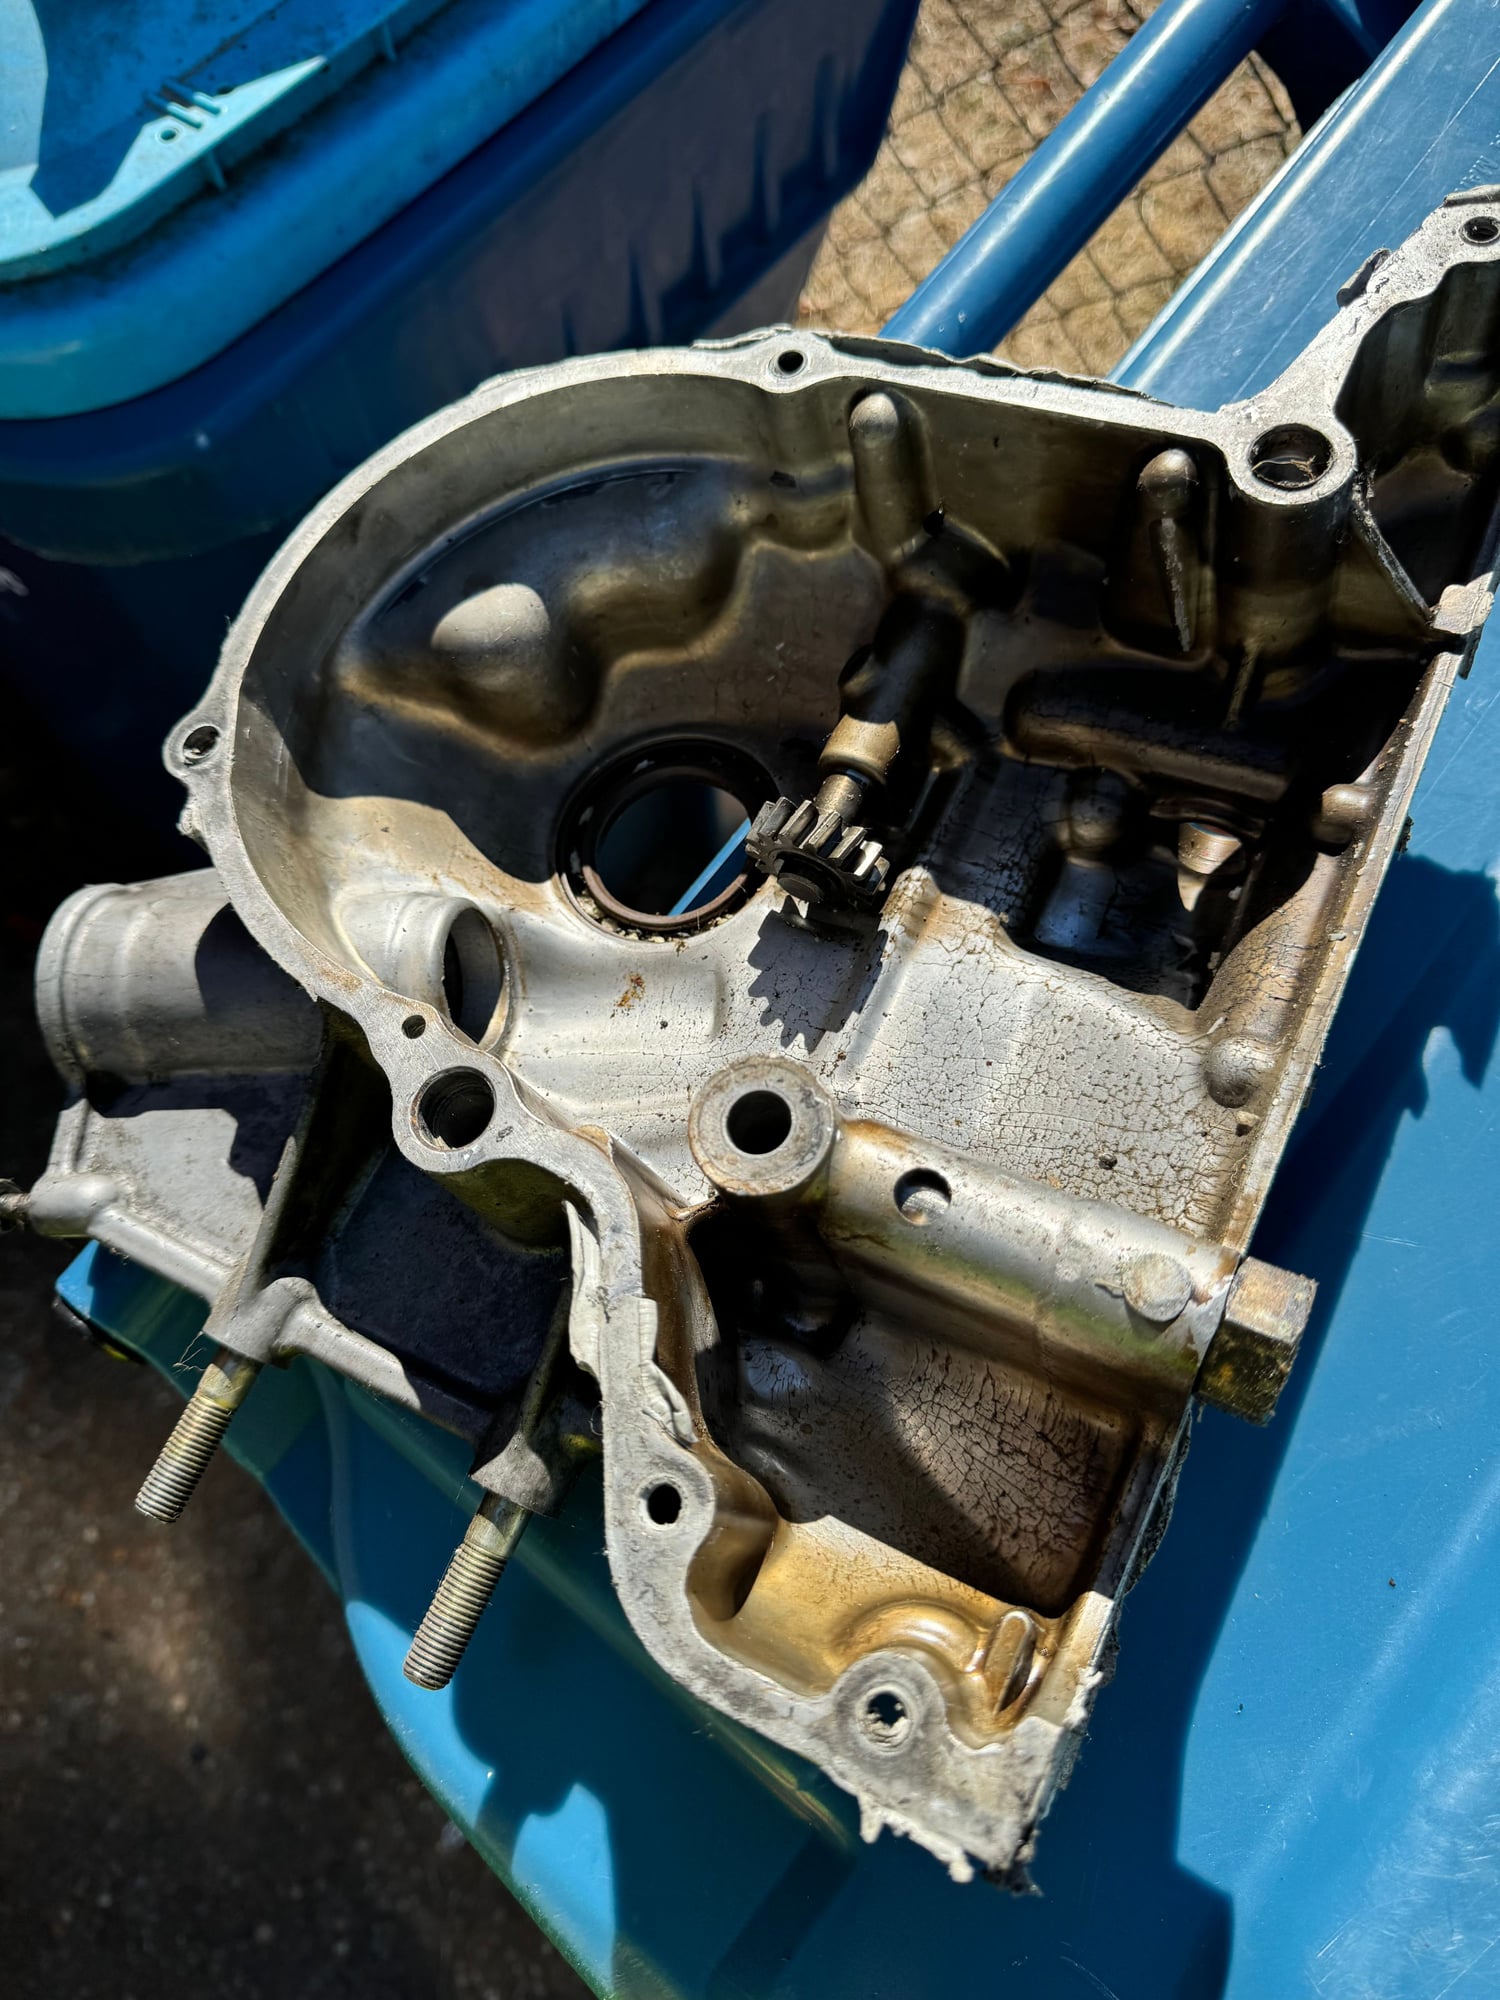 Engine - Internals - S5 turbo II irons - Used - Saint Louis, MO 63034, United States